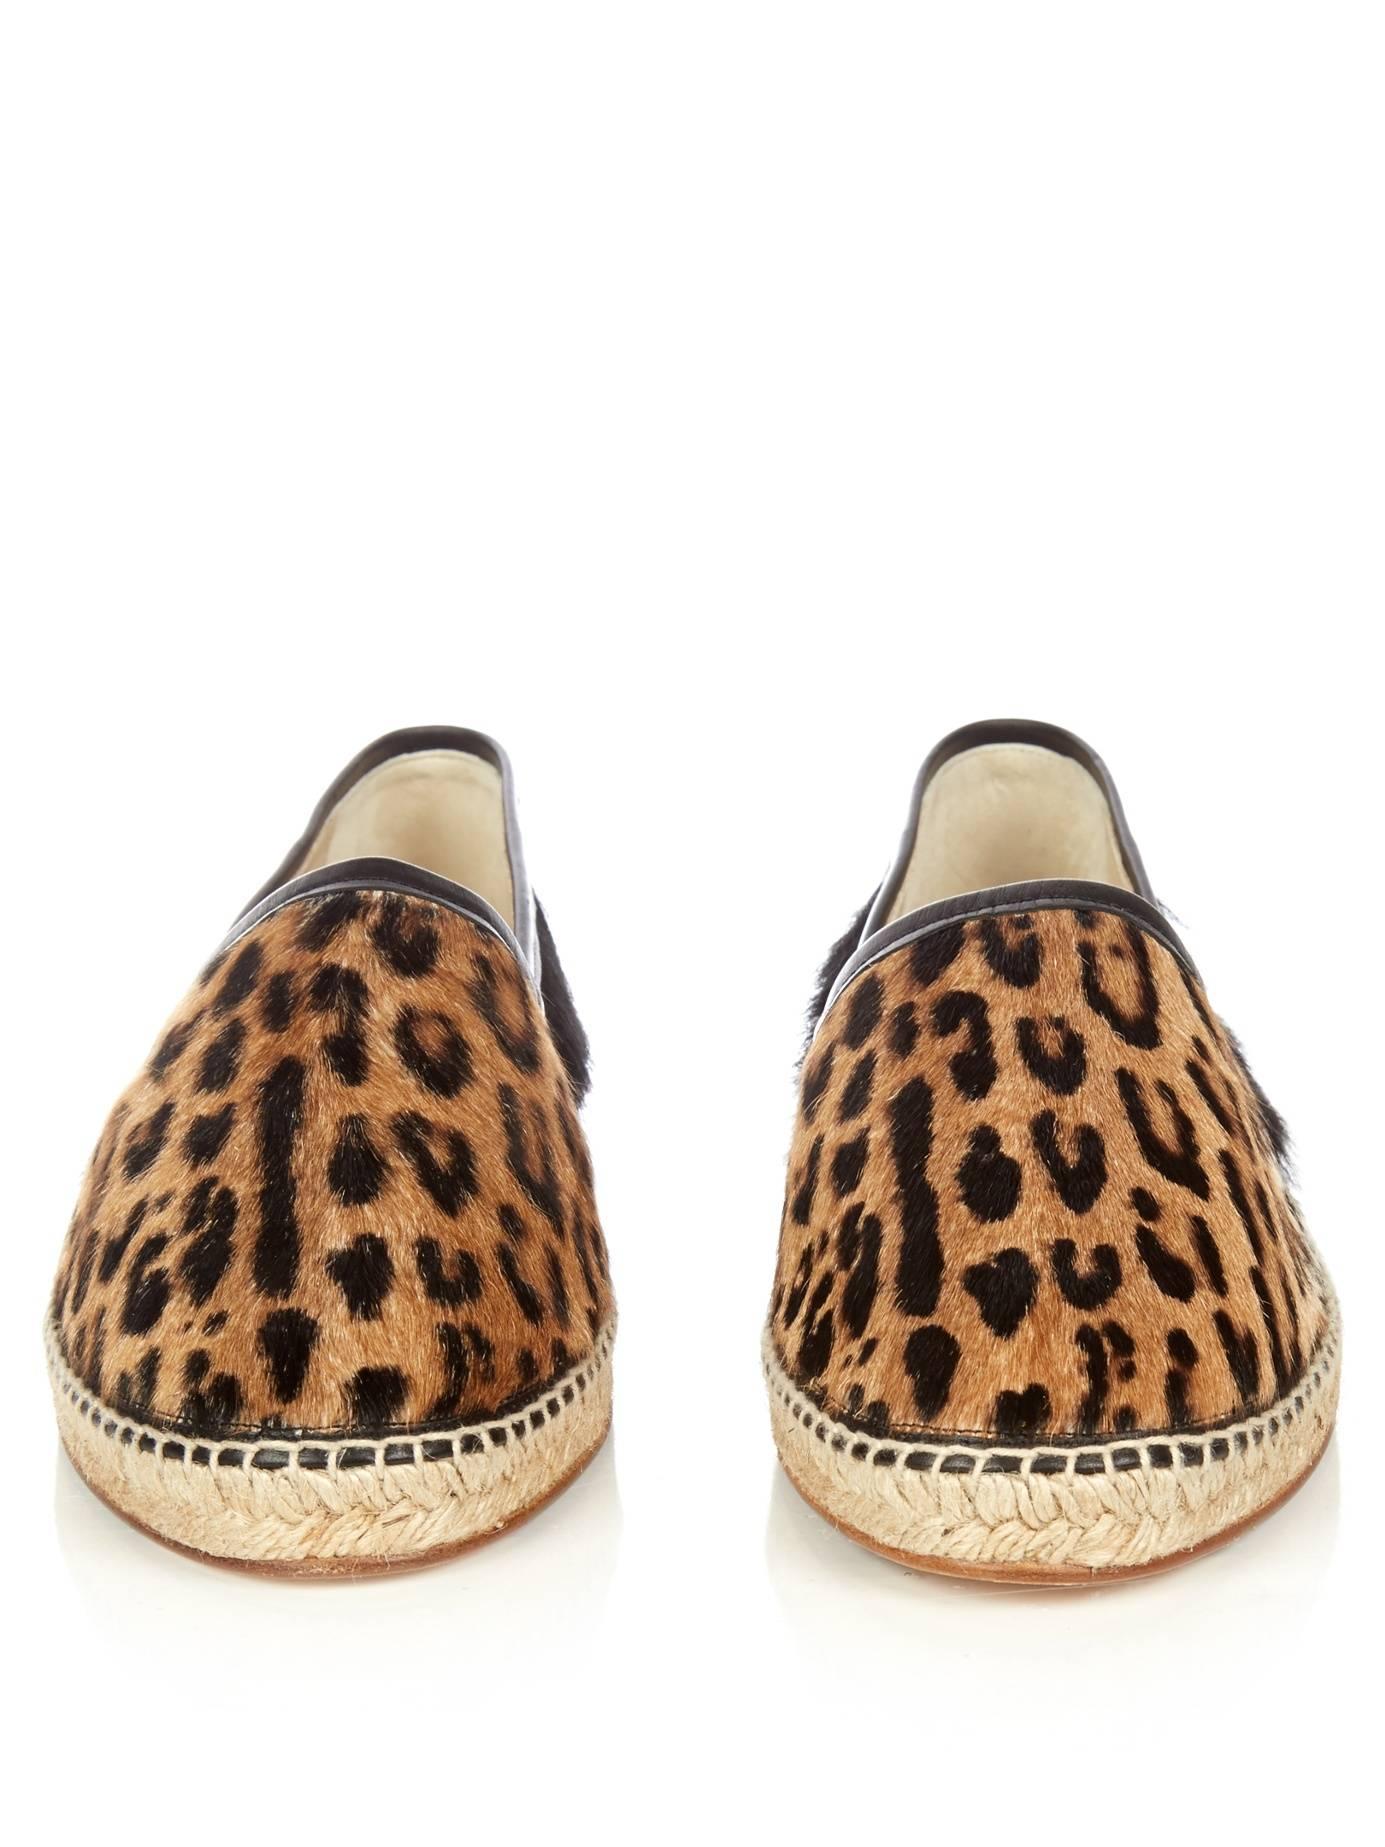 Beige Dolce & Gabbana NEW Men's Black Tan Colorblock Calf Hair Loafers Slippers in Box